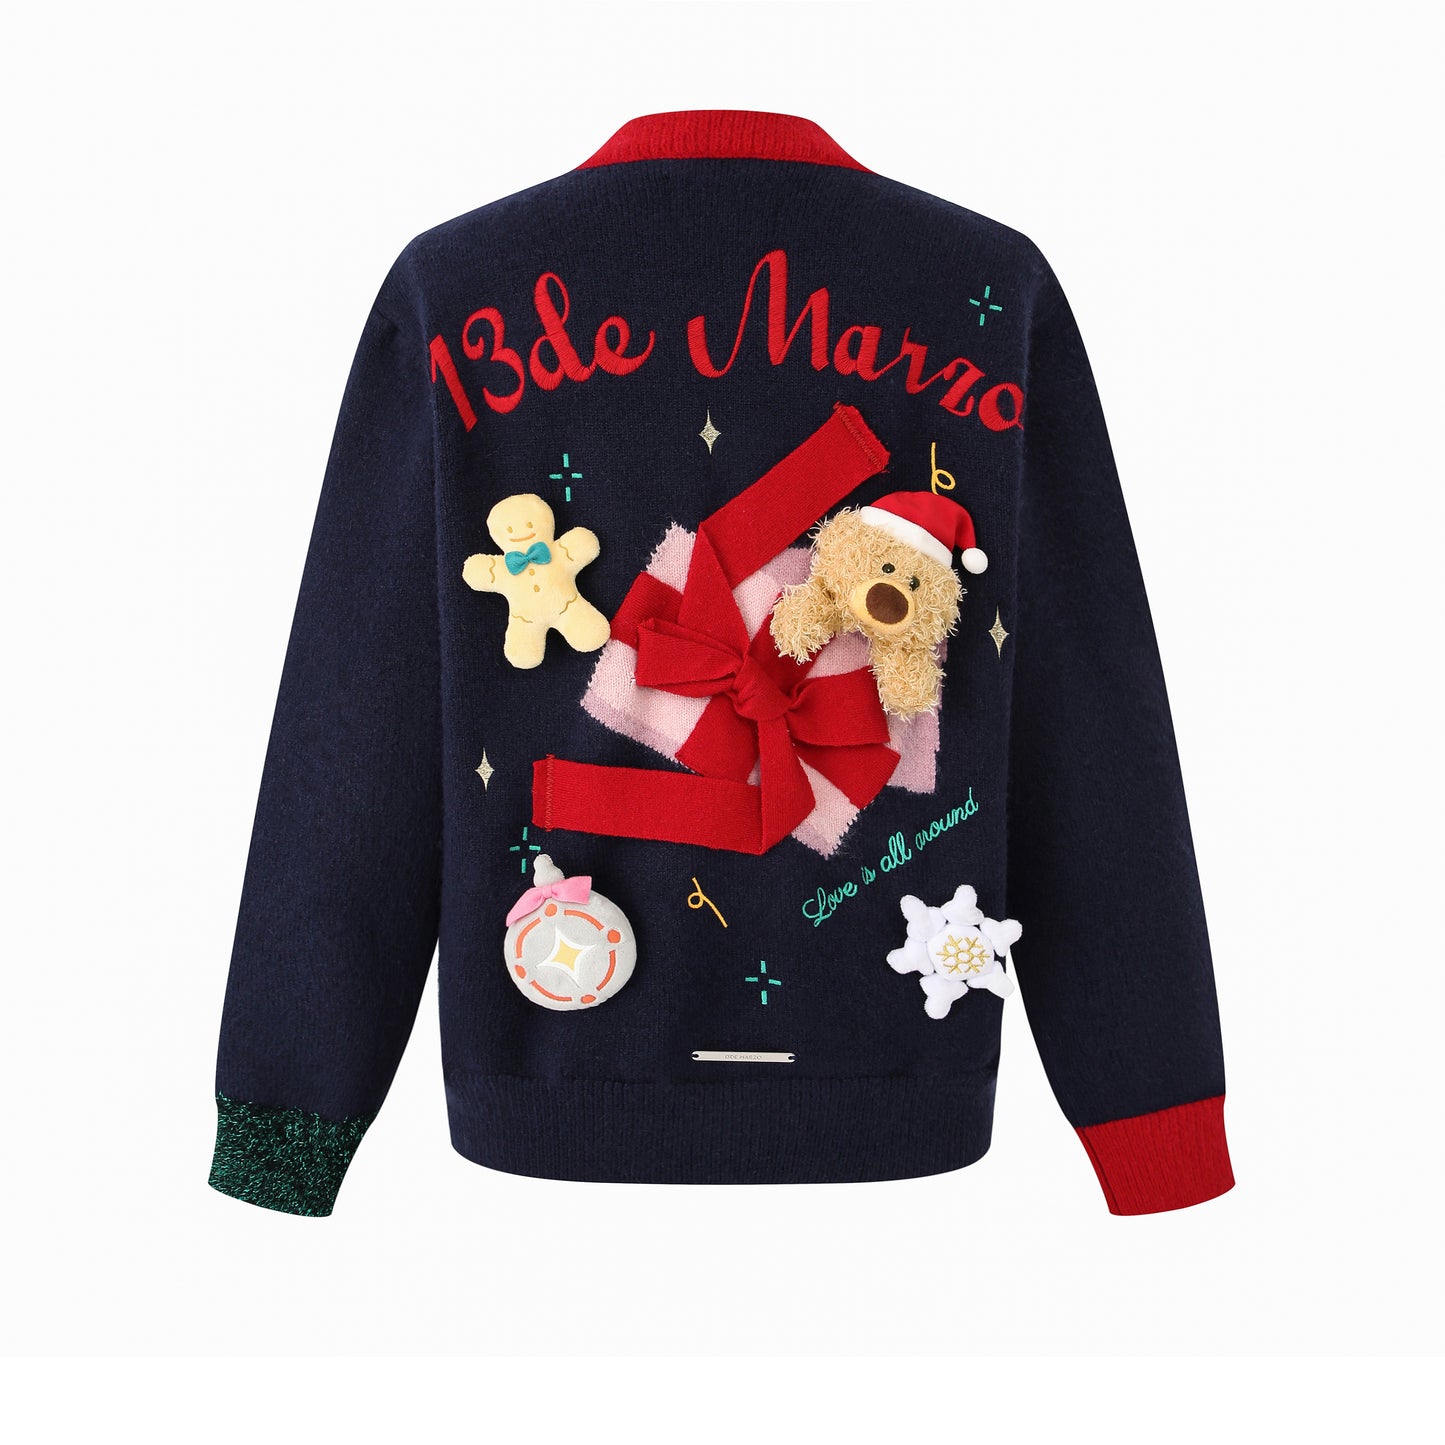 13DE MARZO Christmas Gift Webbing Knit Cardigan